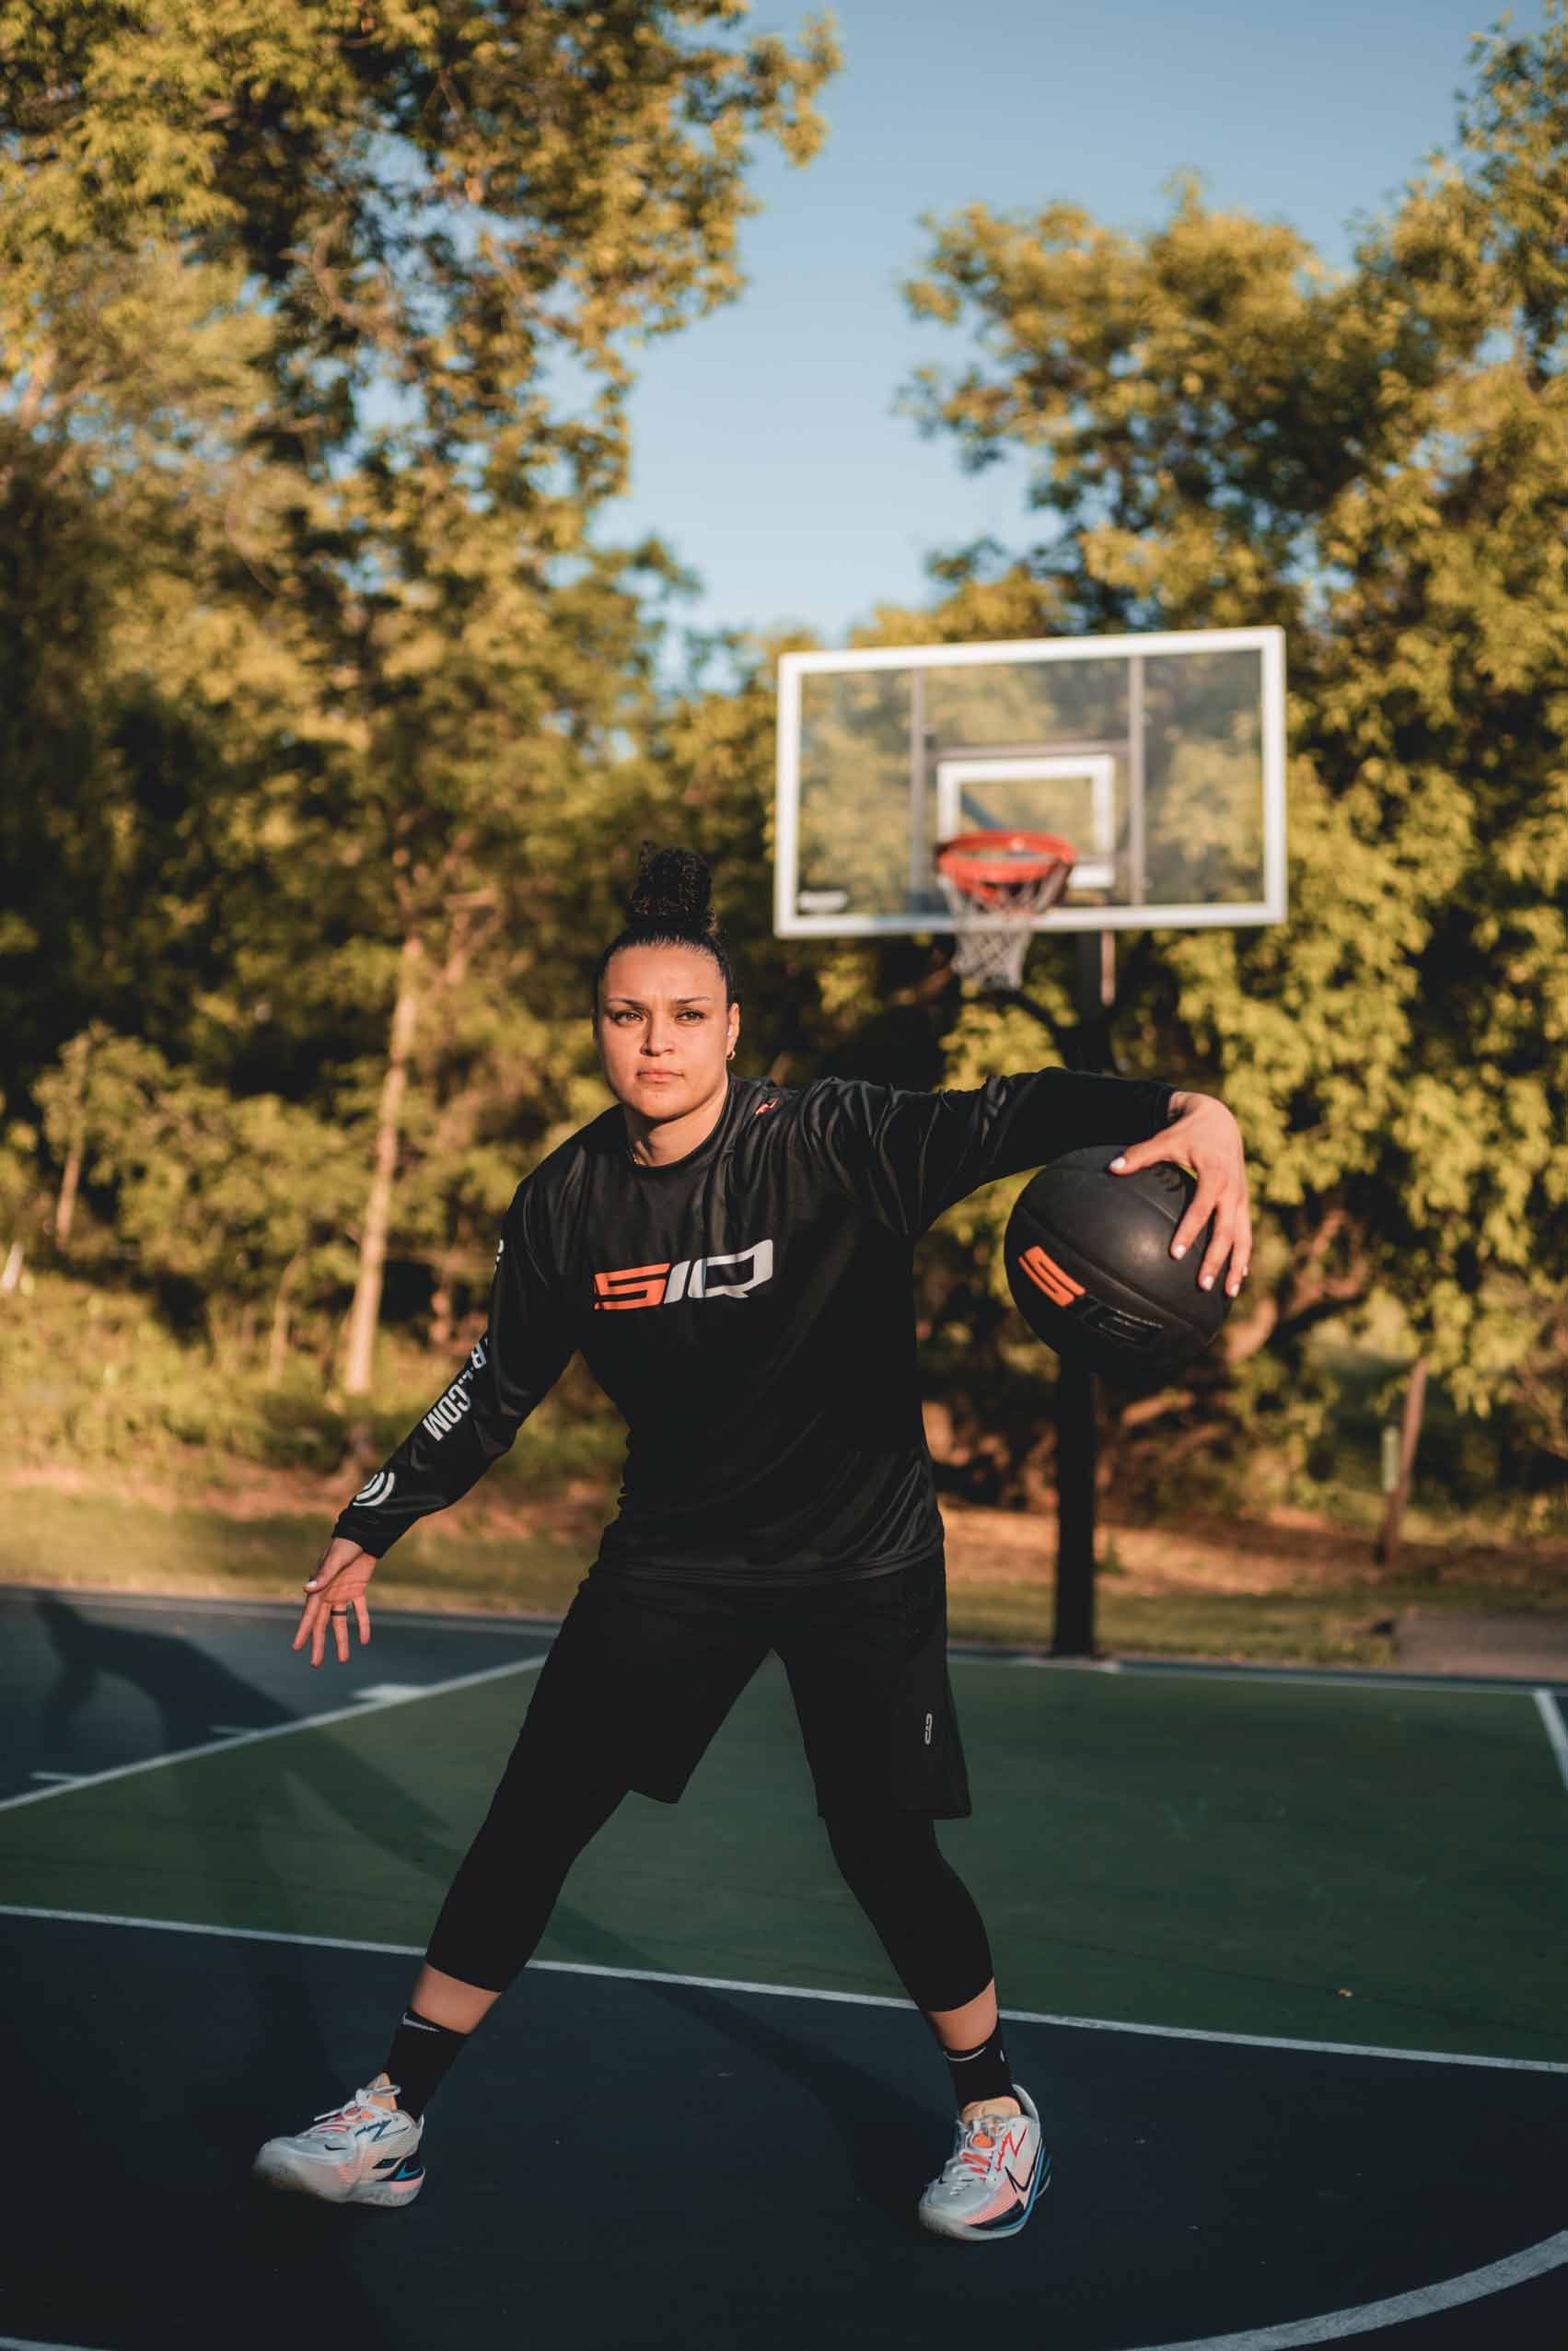 Kayla McBride, professional female basketball player on WNBA's Minnesota Lynx, using the outdoor women's smart basketball.